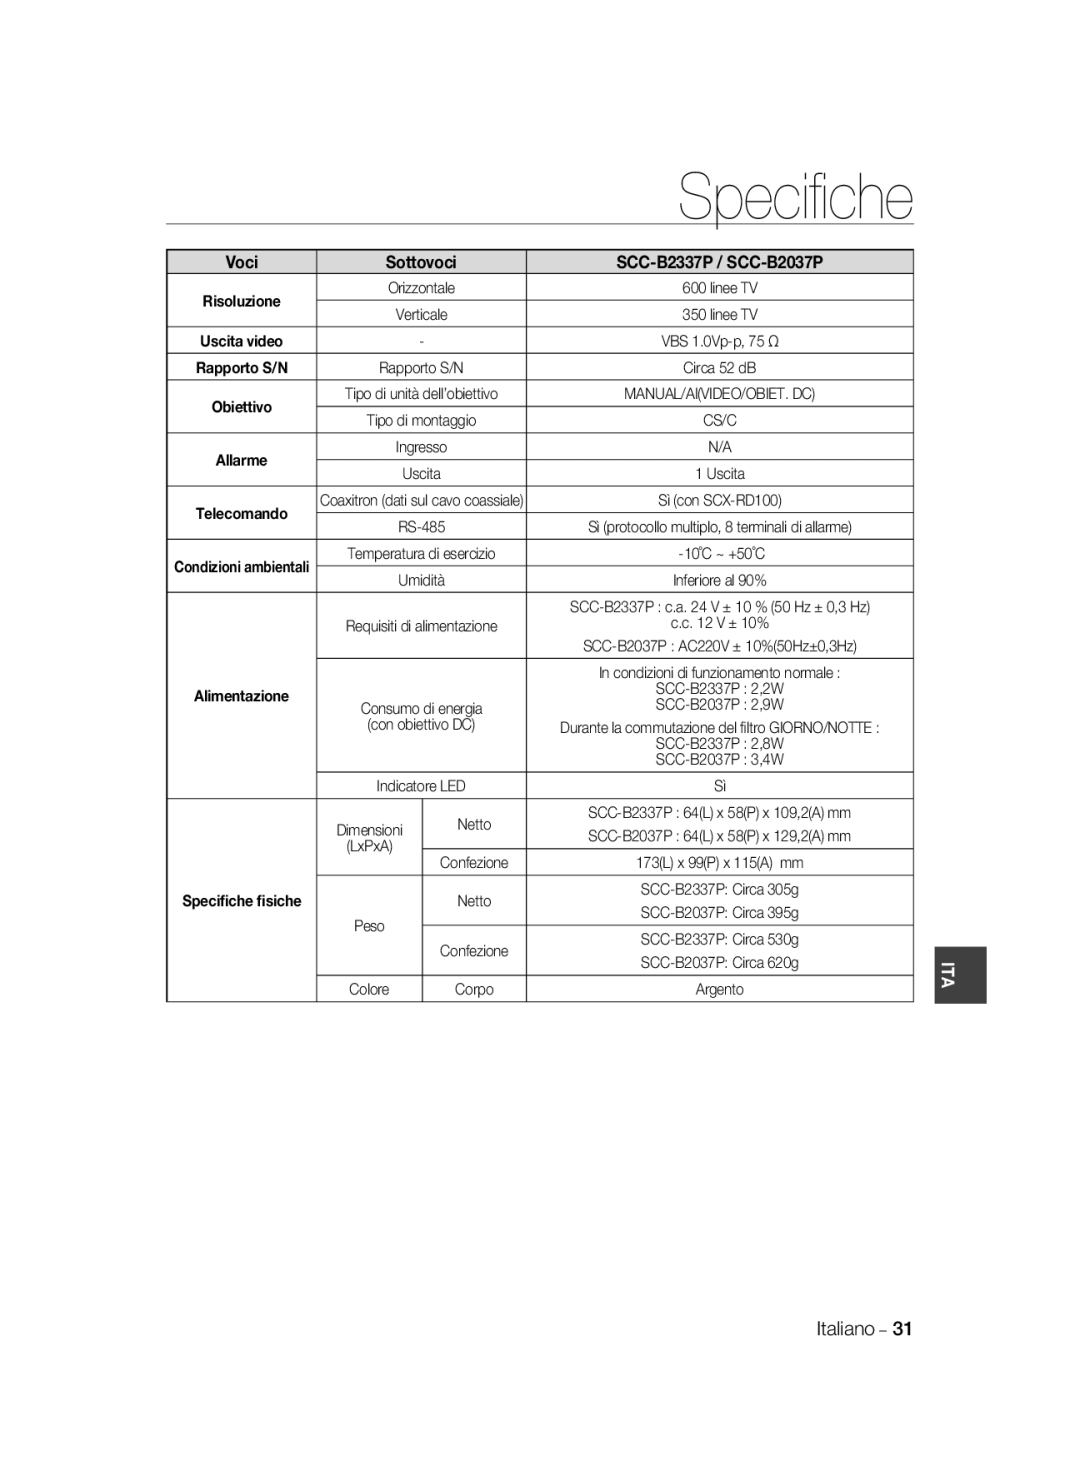 Samsung manual Sottovoci, Speciﬁche, Voci, SCC-B2337P / SCC-B2037P 